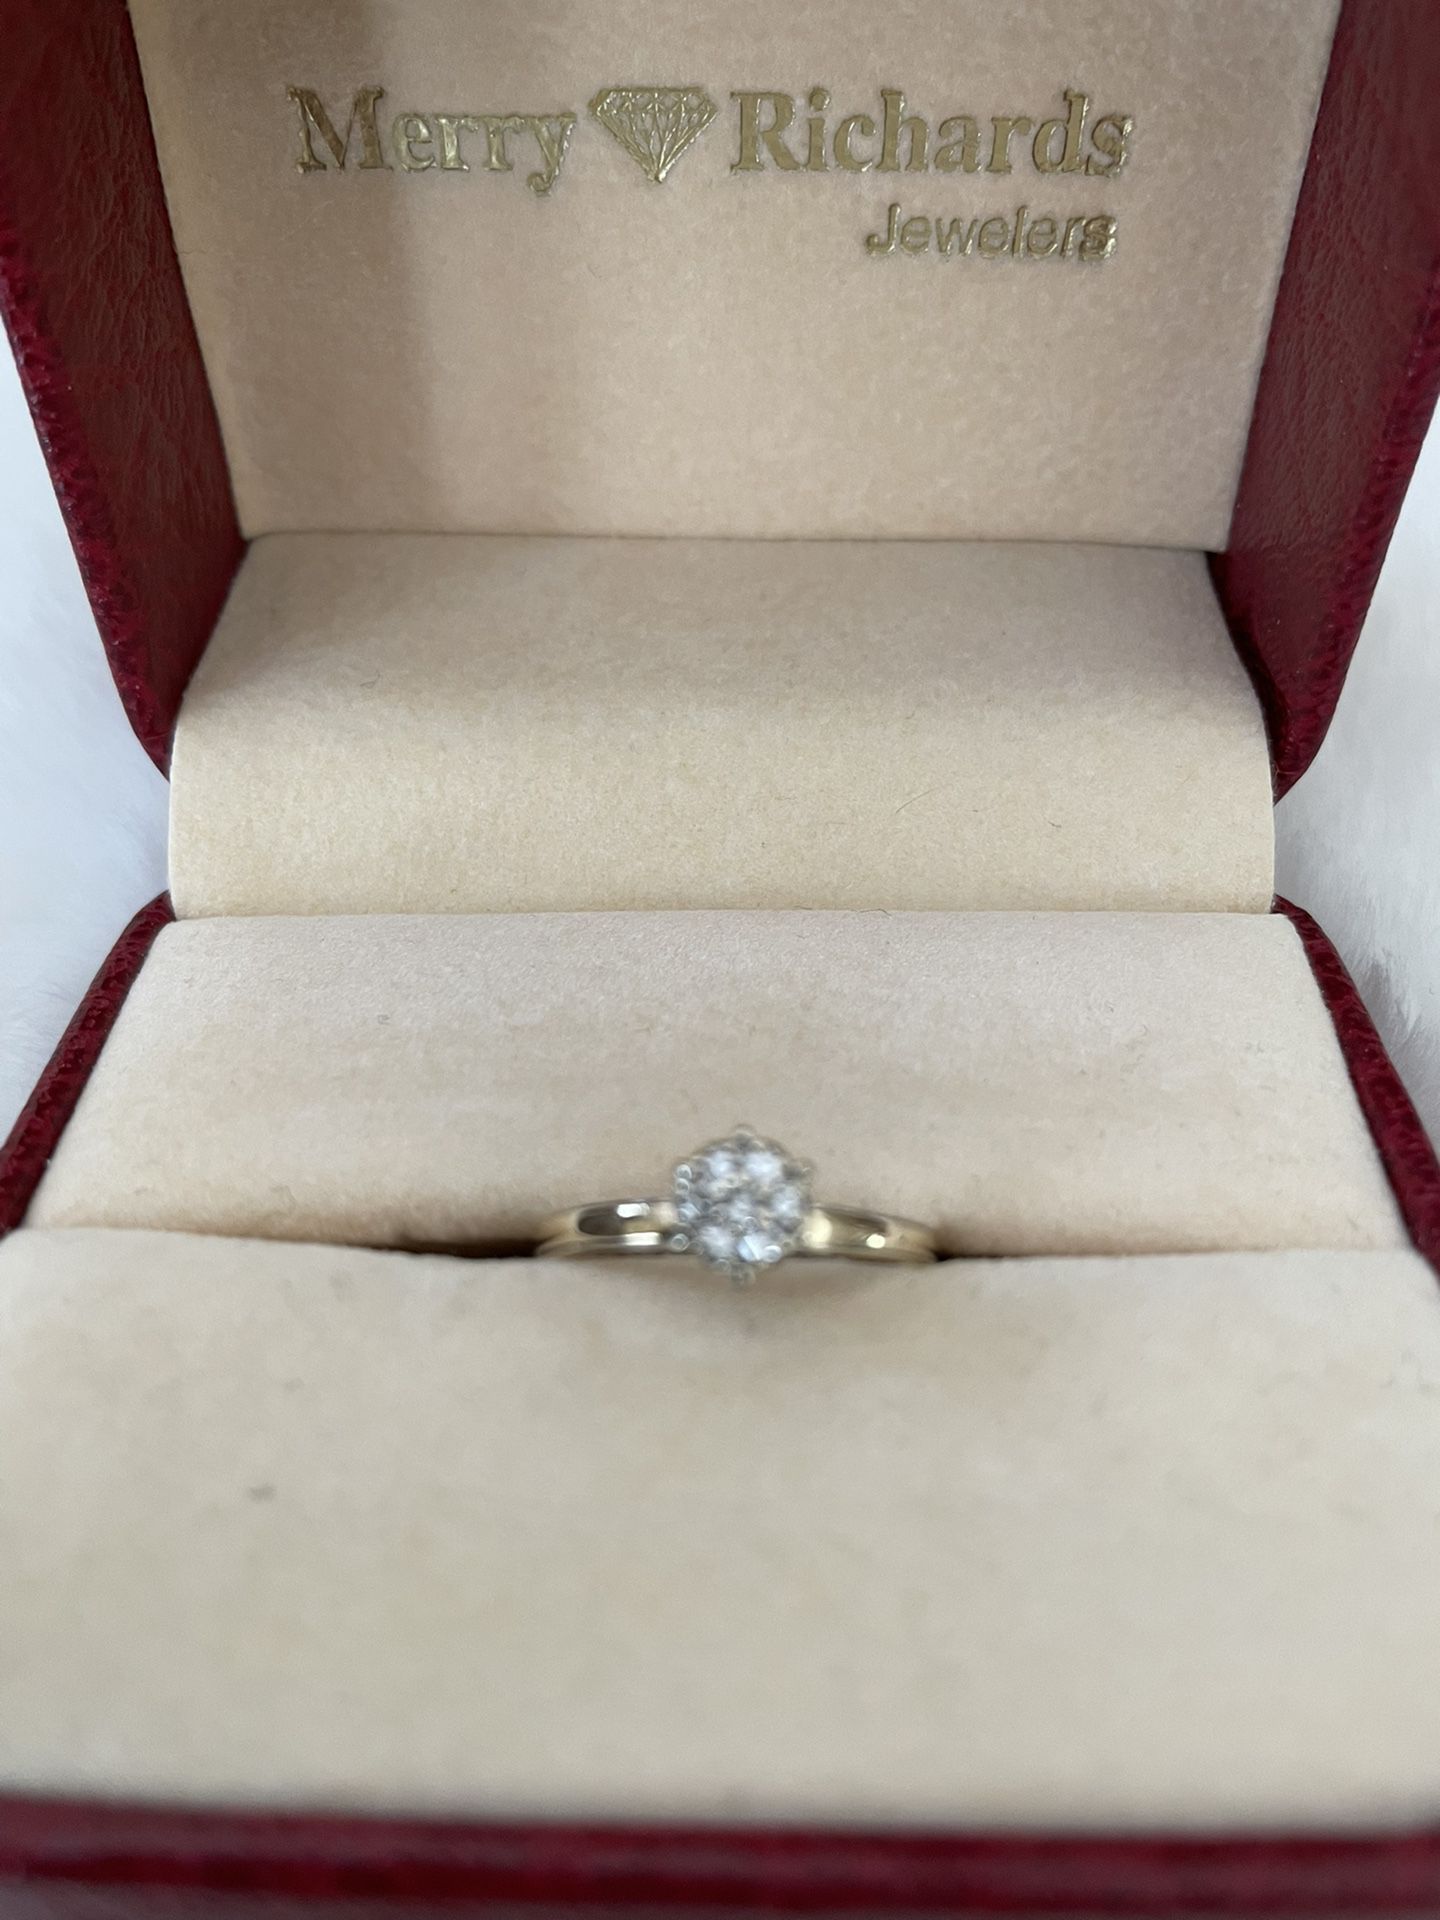 Diamond Engagement Ring Sz 6-7 14 K Gold 3/4 Carat Cluster, Beautiful! 